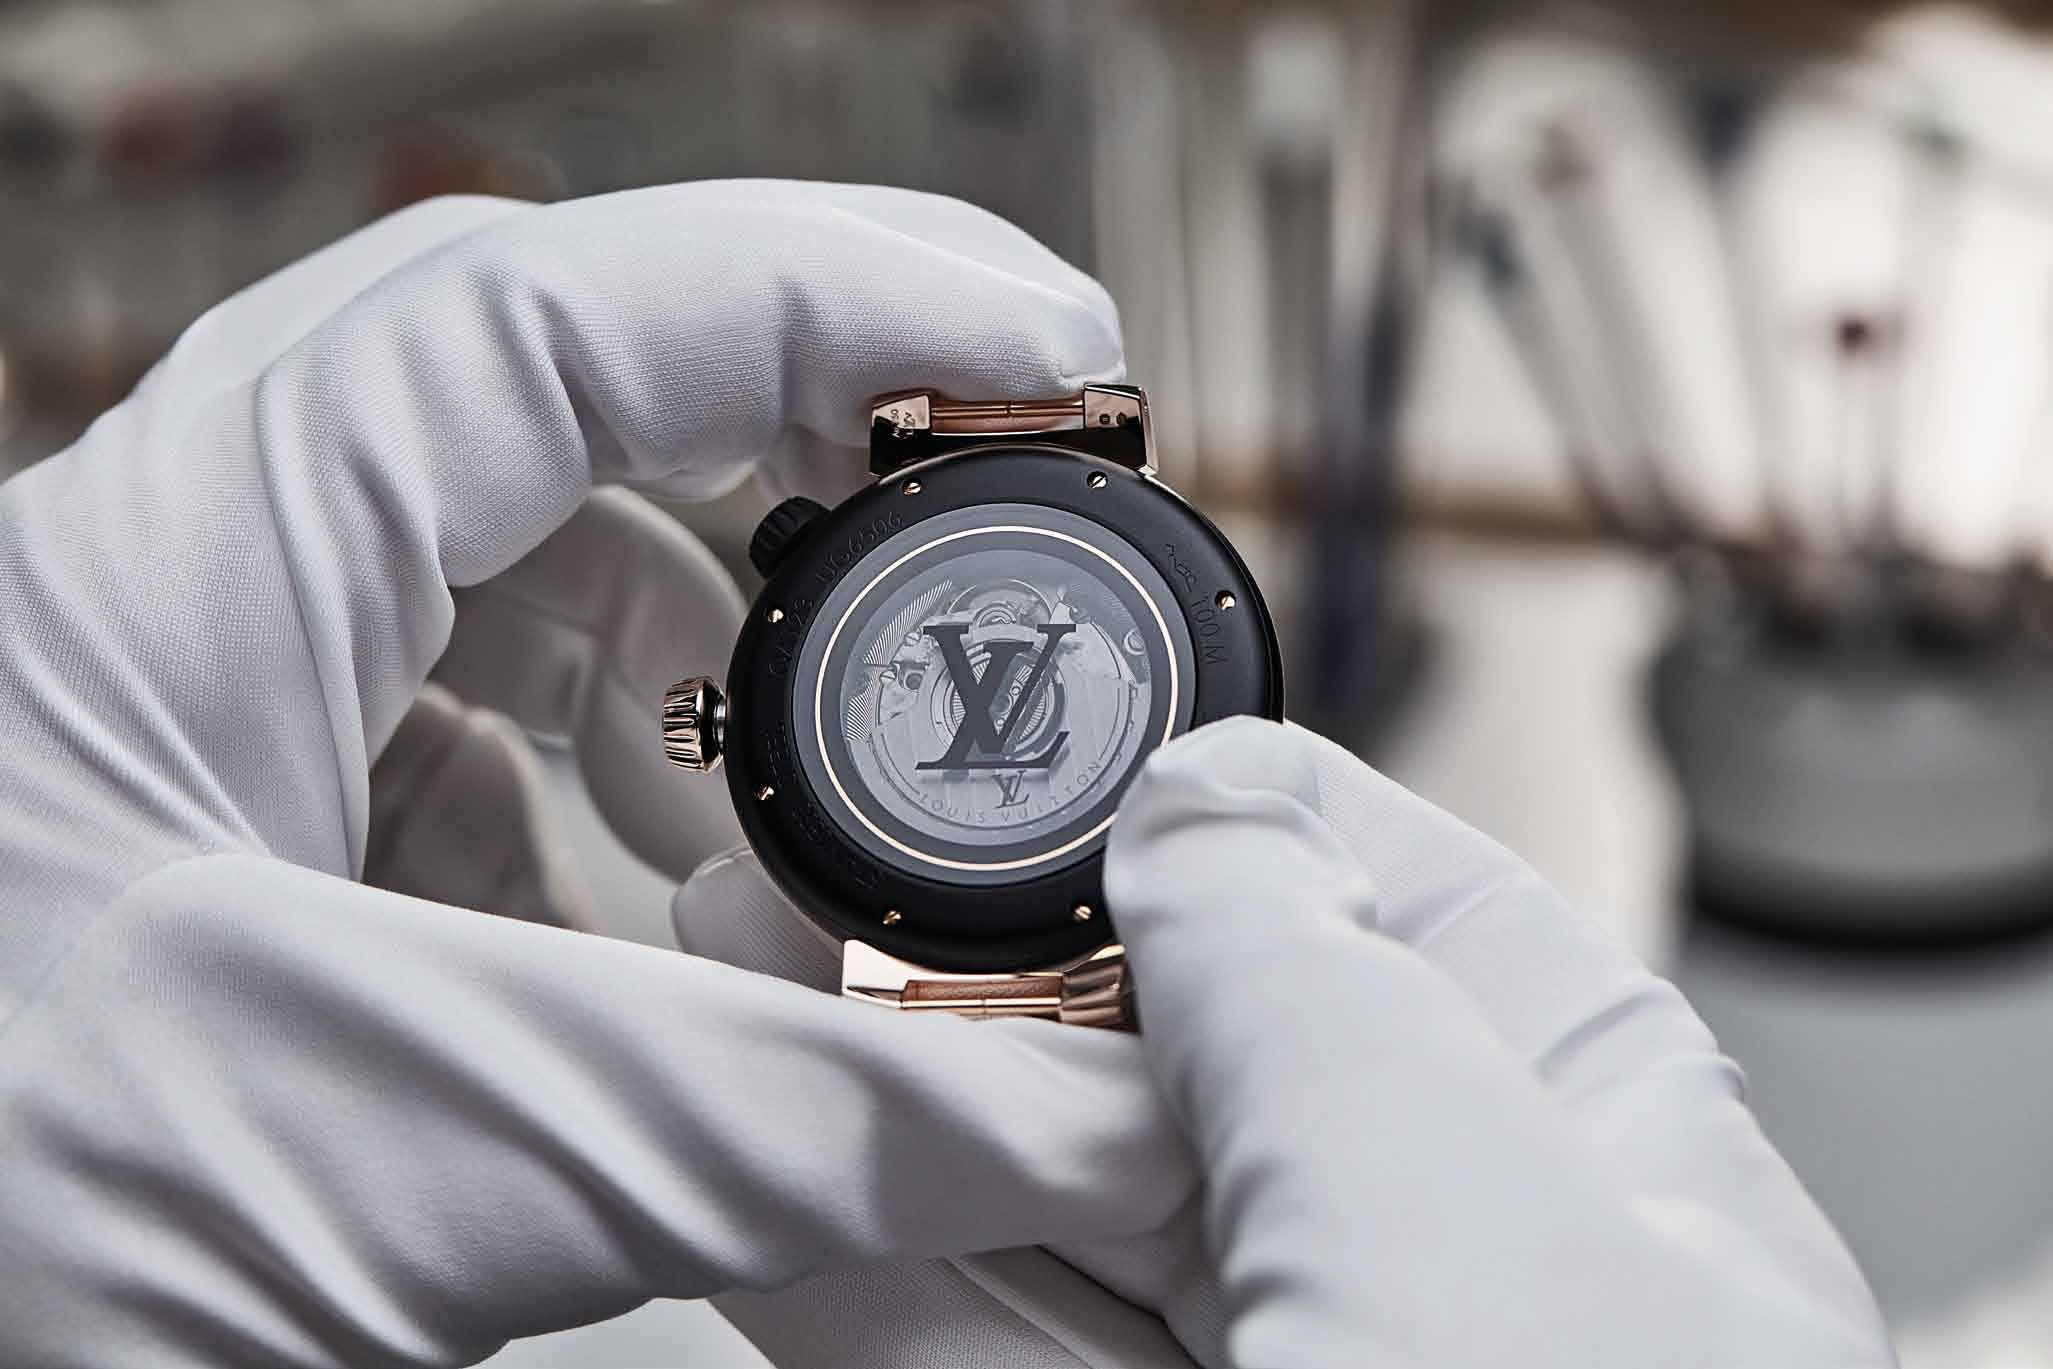 IN-DEPTH: The Louis Vuitton Tambour Curve GMT Flying Tourbillon